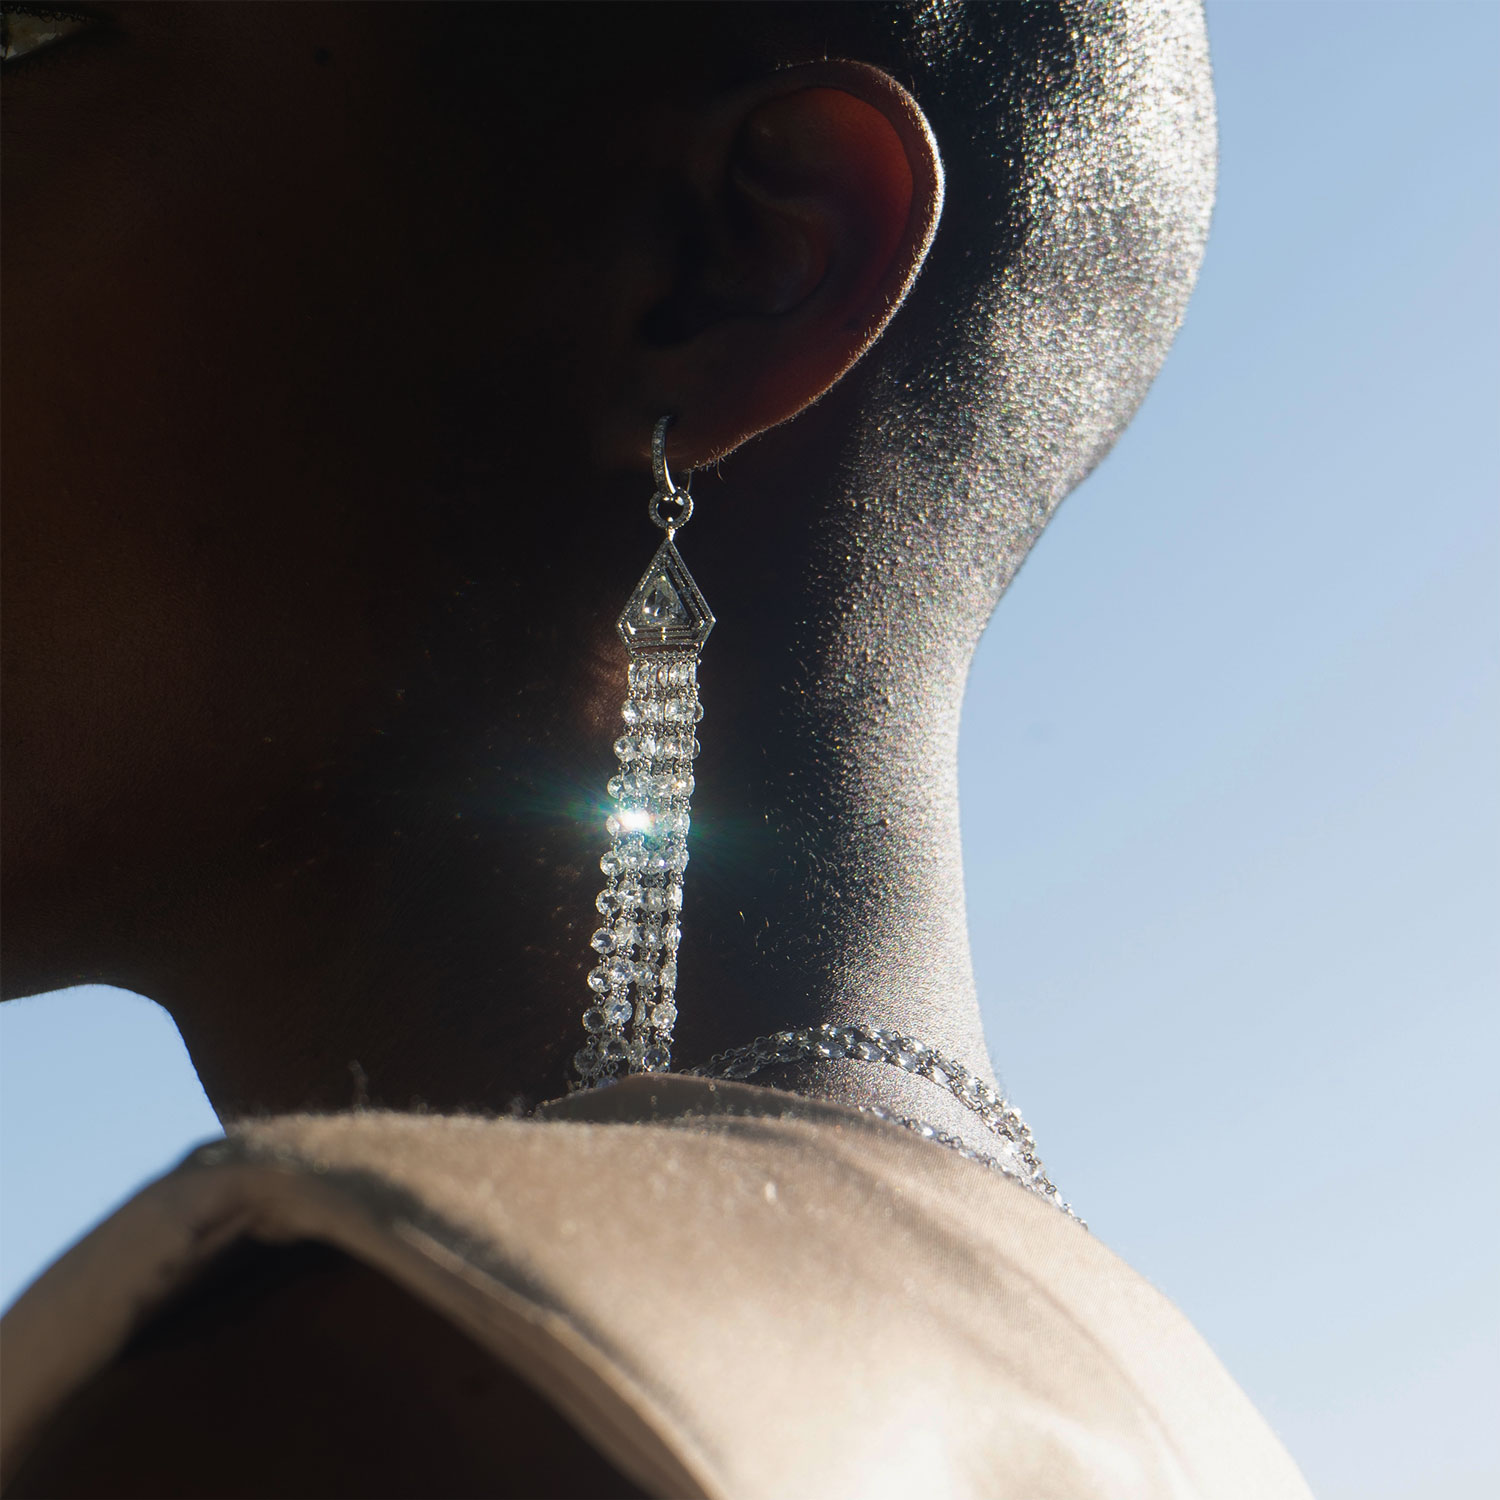 64facets rose cut diamond earrings